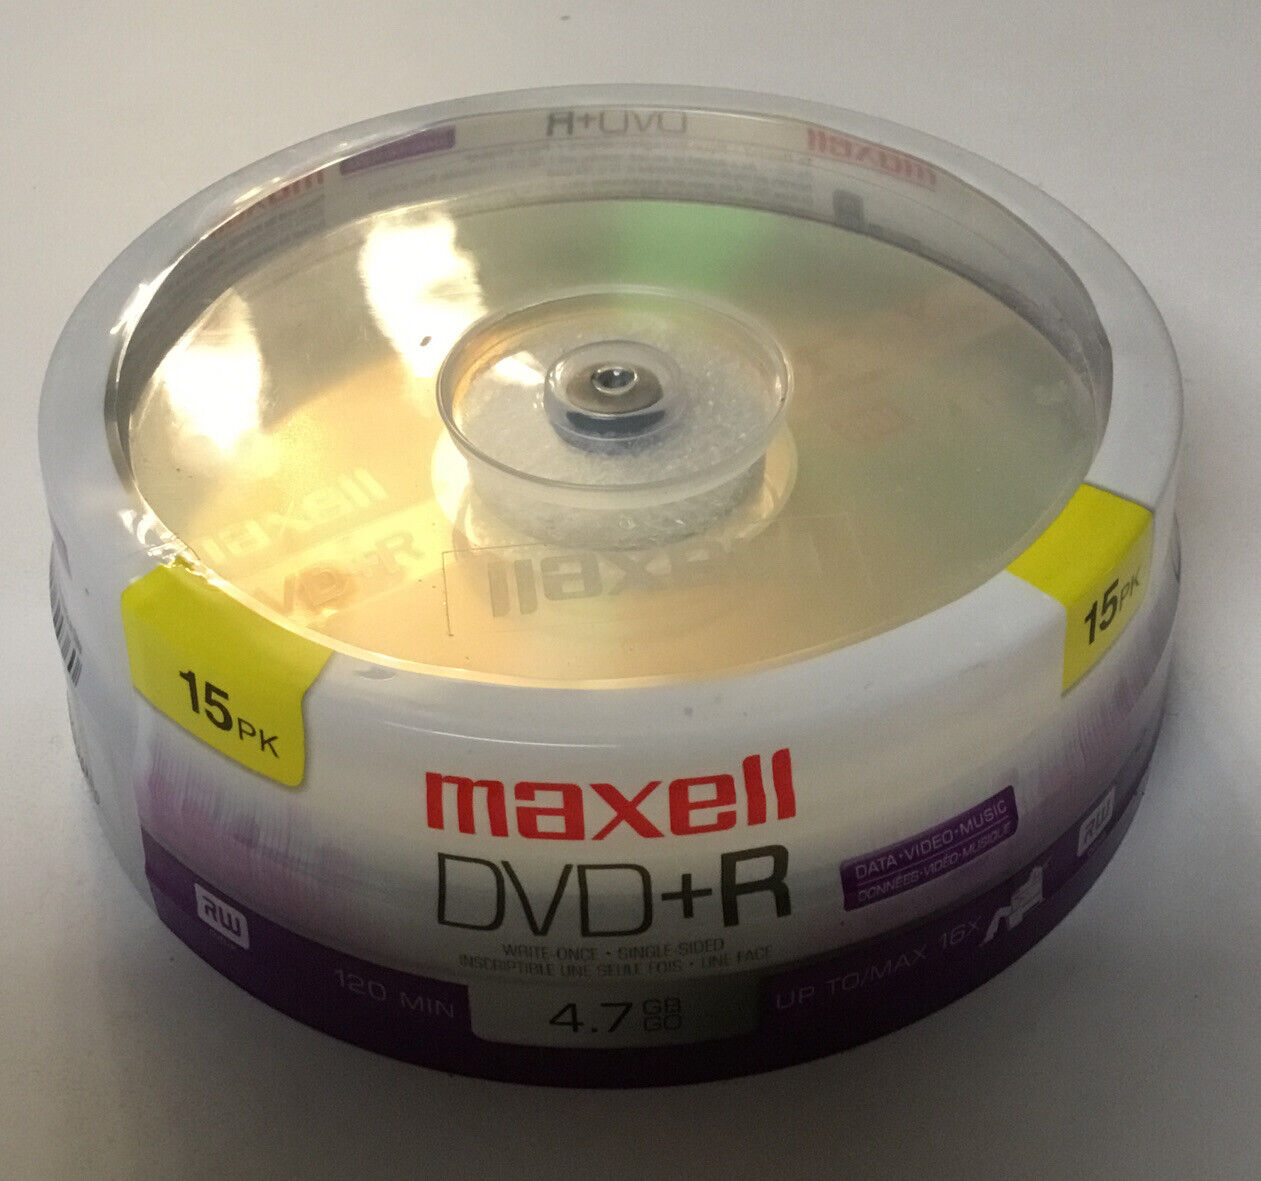 15 PK Maxell Maxdata DVD+R 4.7 GB 120 min Write Once with 16X Write Speed